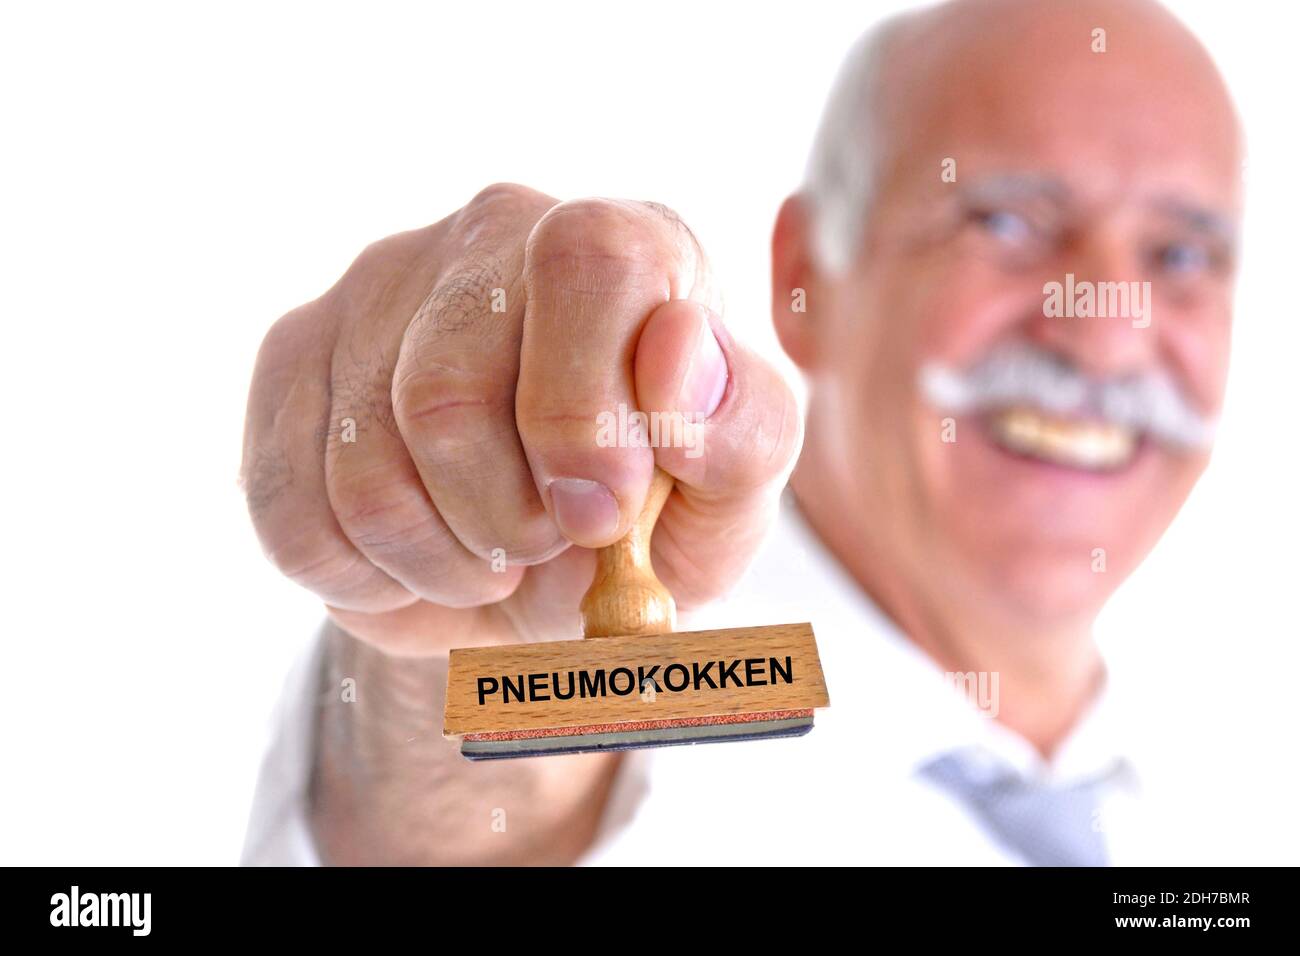 65, 70, Jahre, Mann hält Stempel in der Hand, Aufschrift: Pneumokokken, Banque D'Images